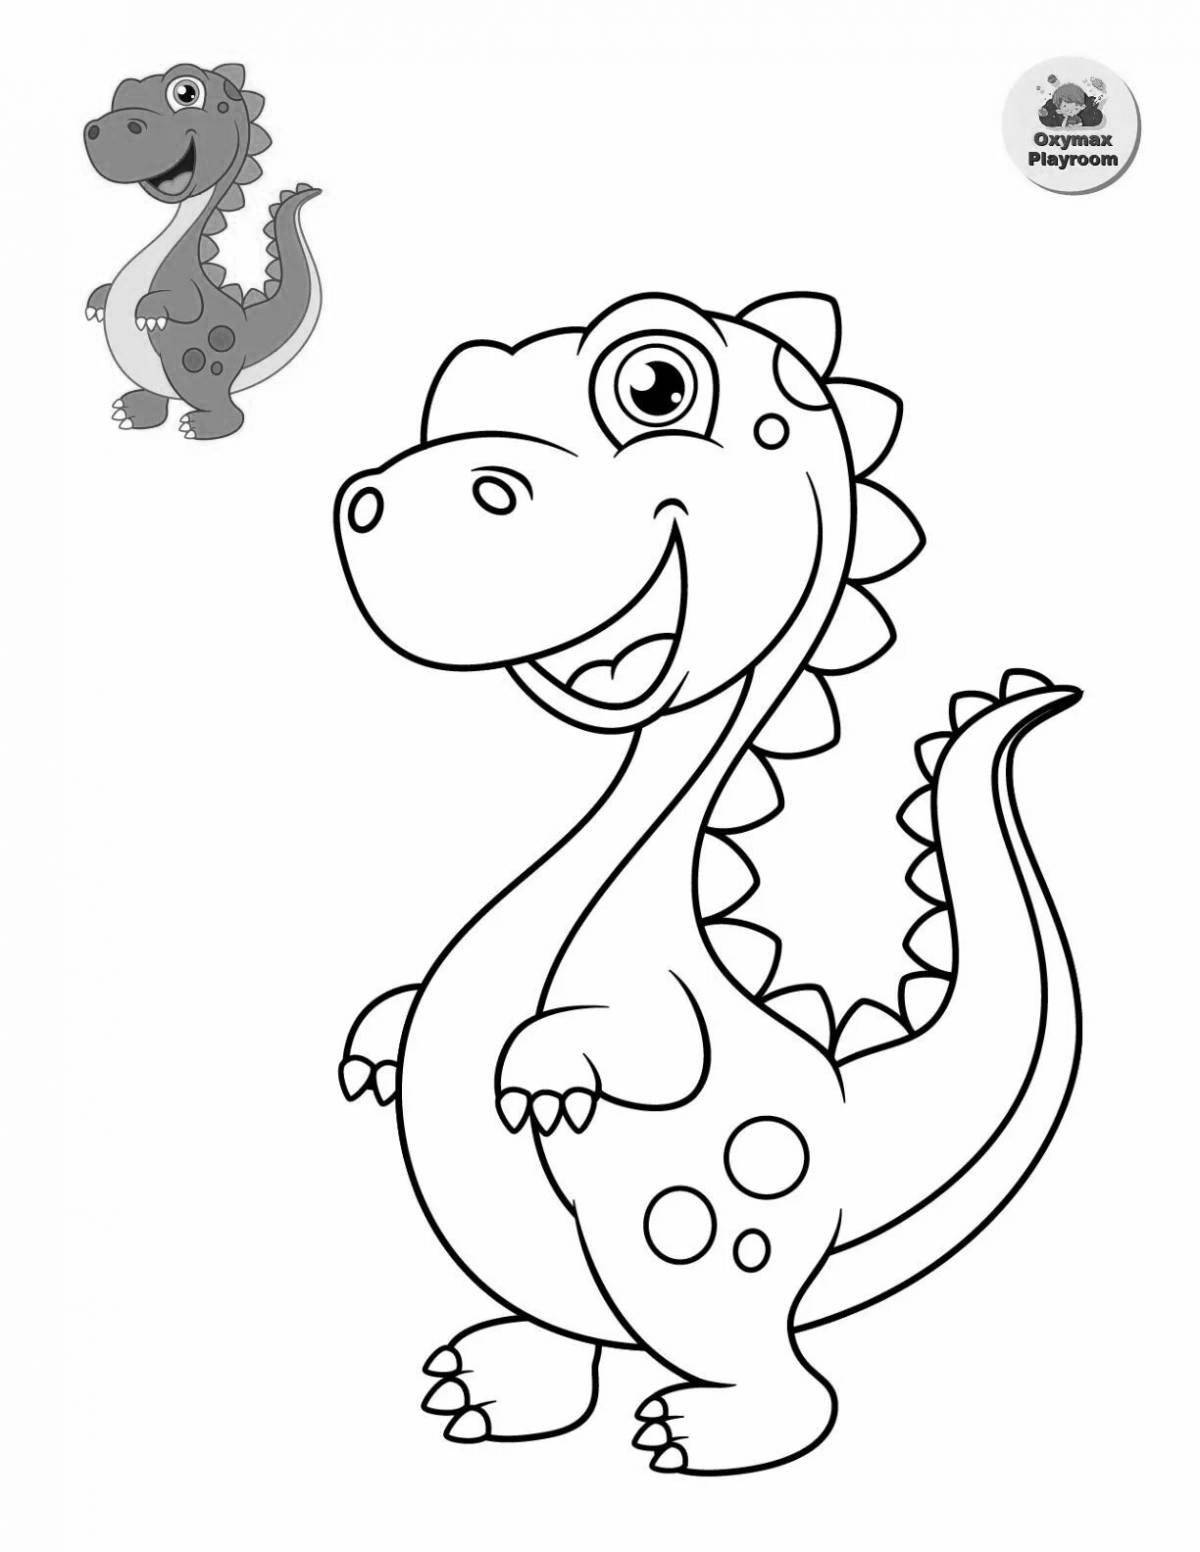 Colorful cartoon dinosaur coloring book